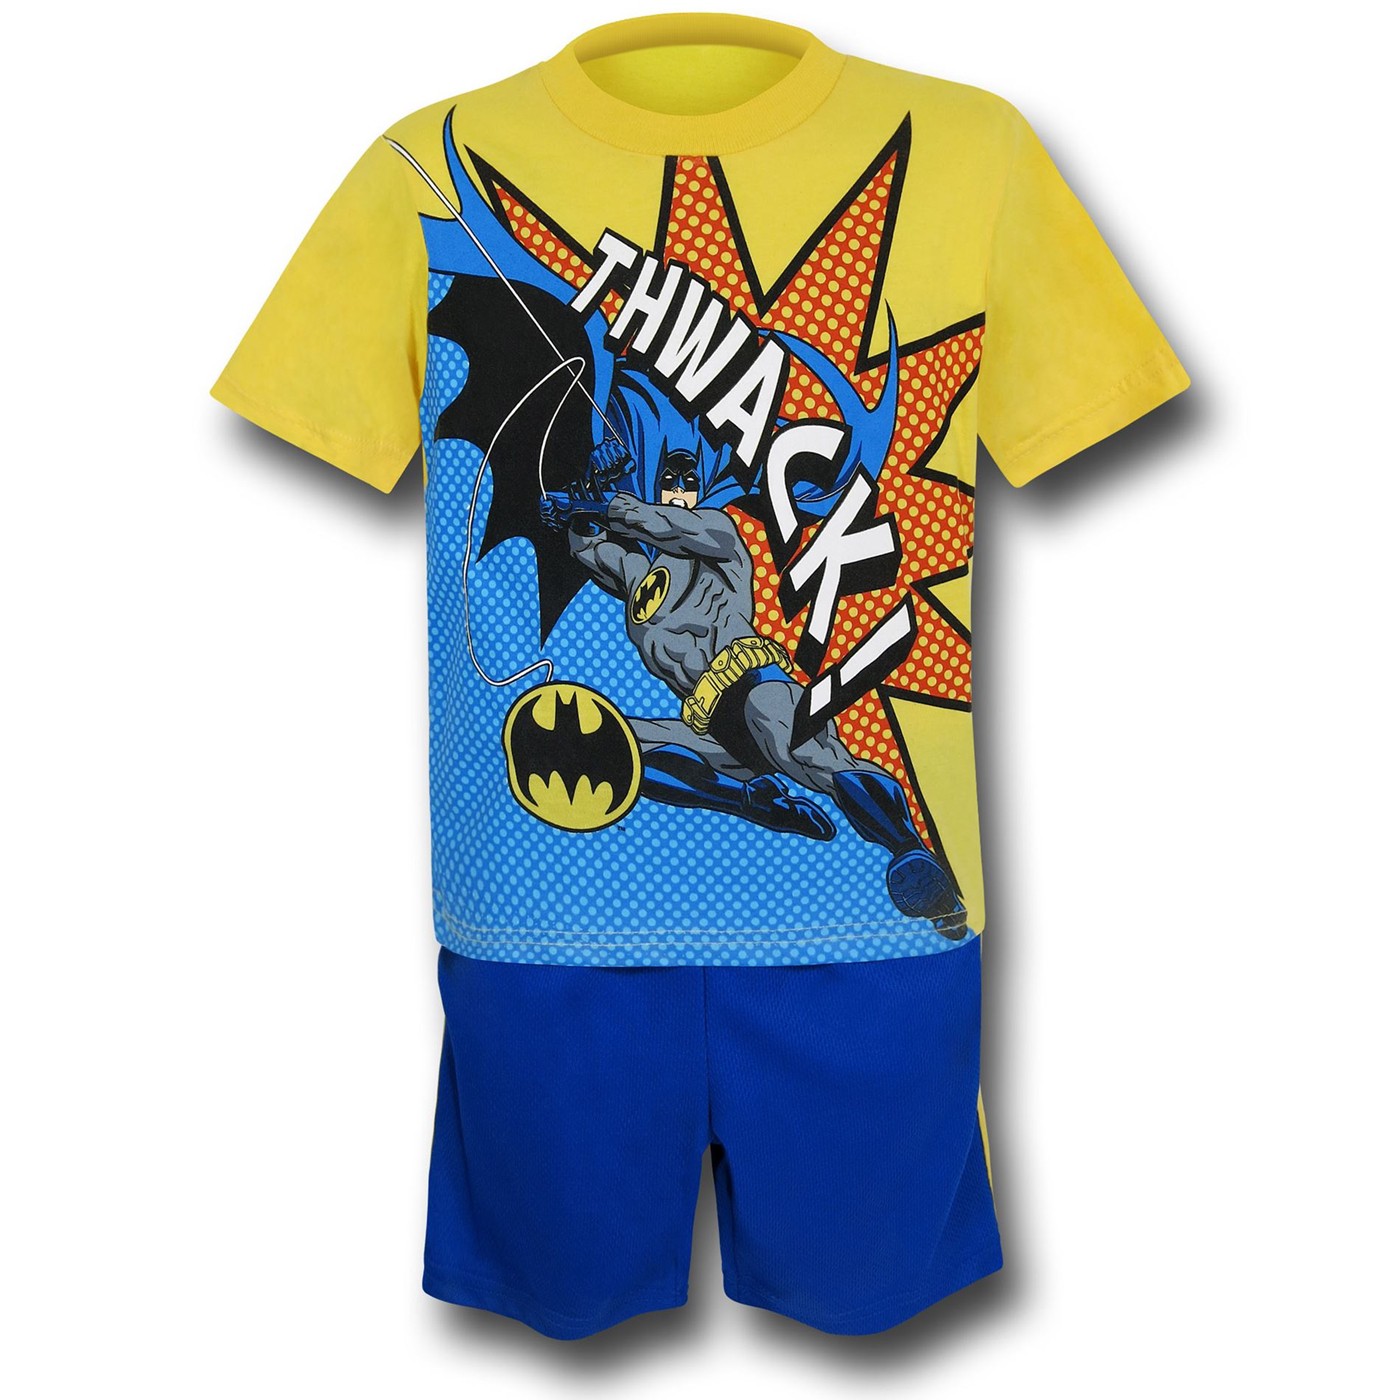 Batman Kids Yellow & Blue Shorts Set